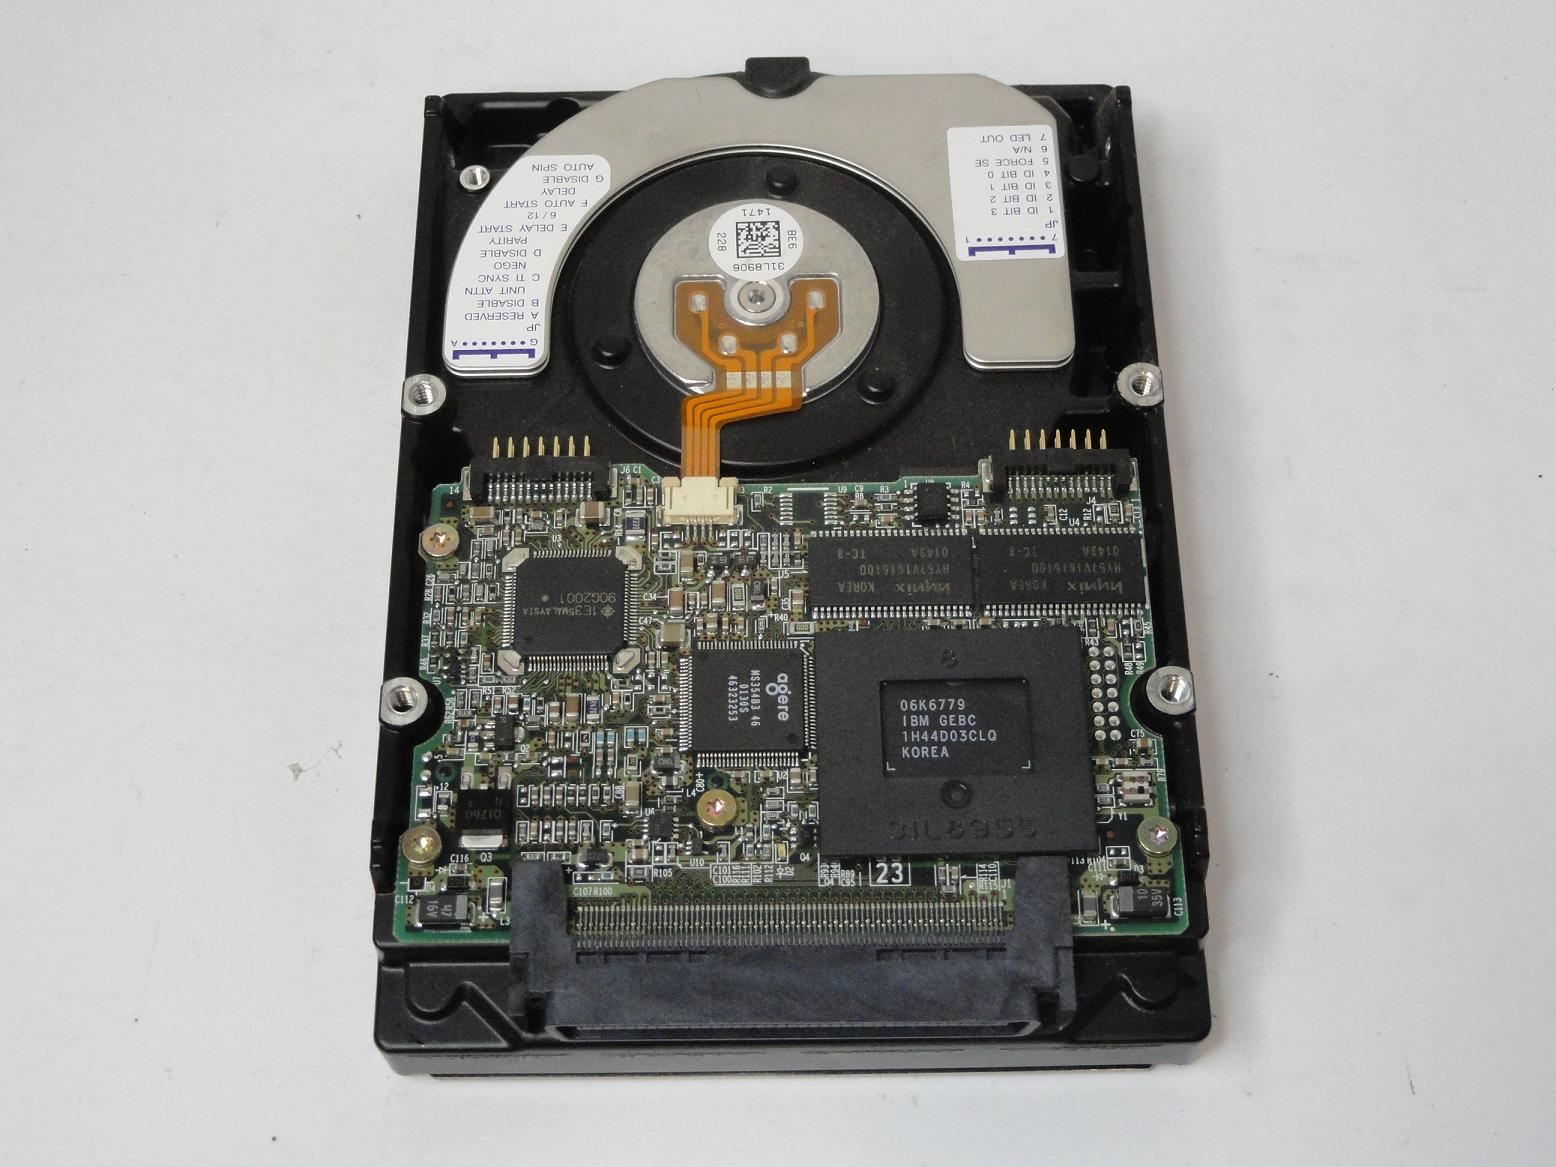 MC0104_07N3840_IBM 18.2GB SCSI 80 Pin 10Krpm 3.5in HDD - Image2